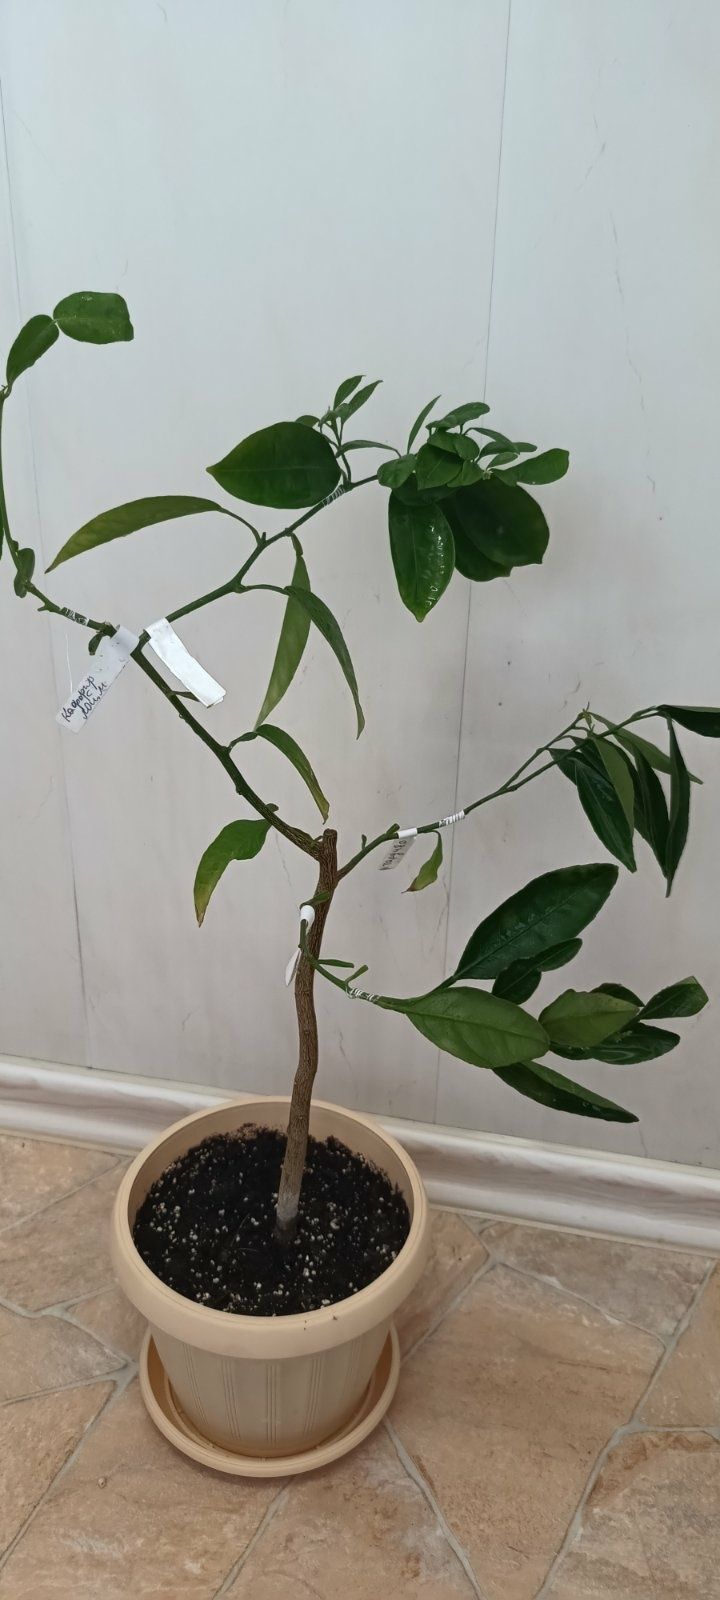 Цитрус дерево-сад - 4 сорта - мандарин, лайм каламондин